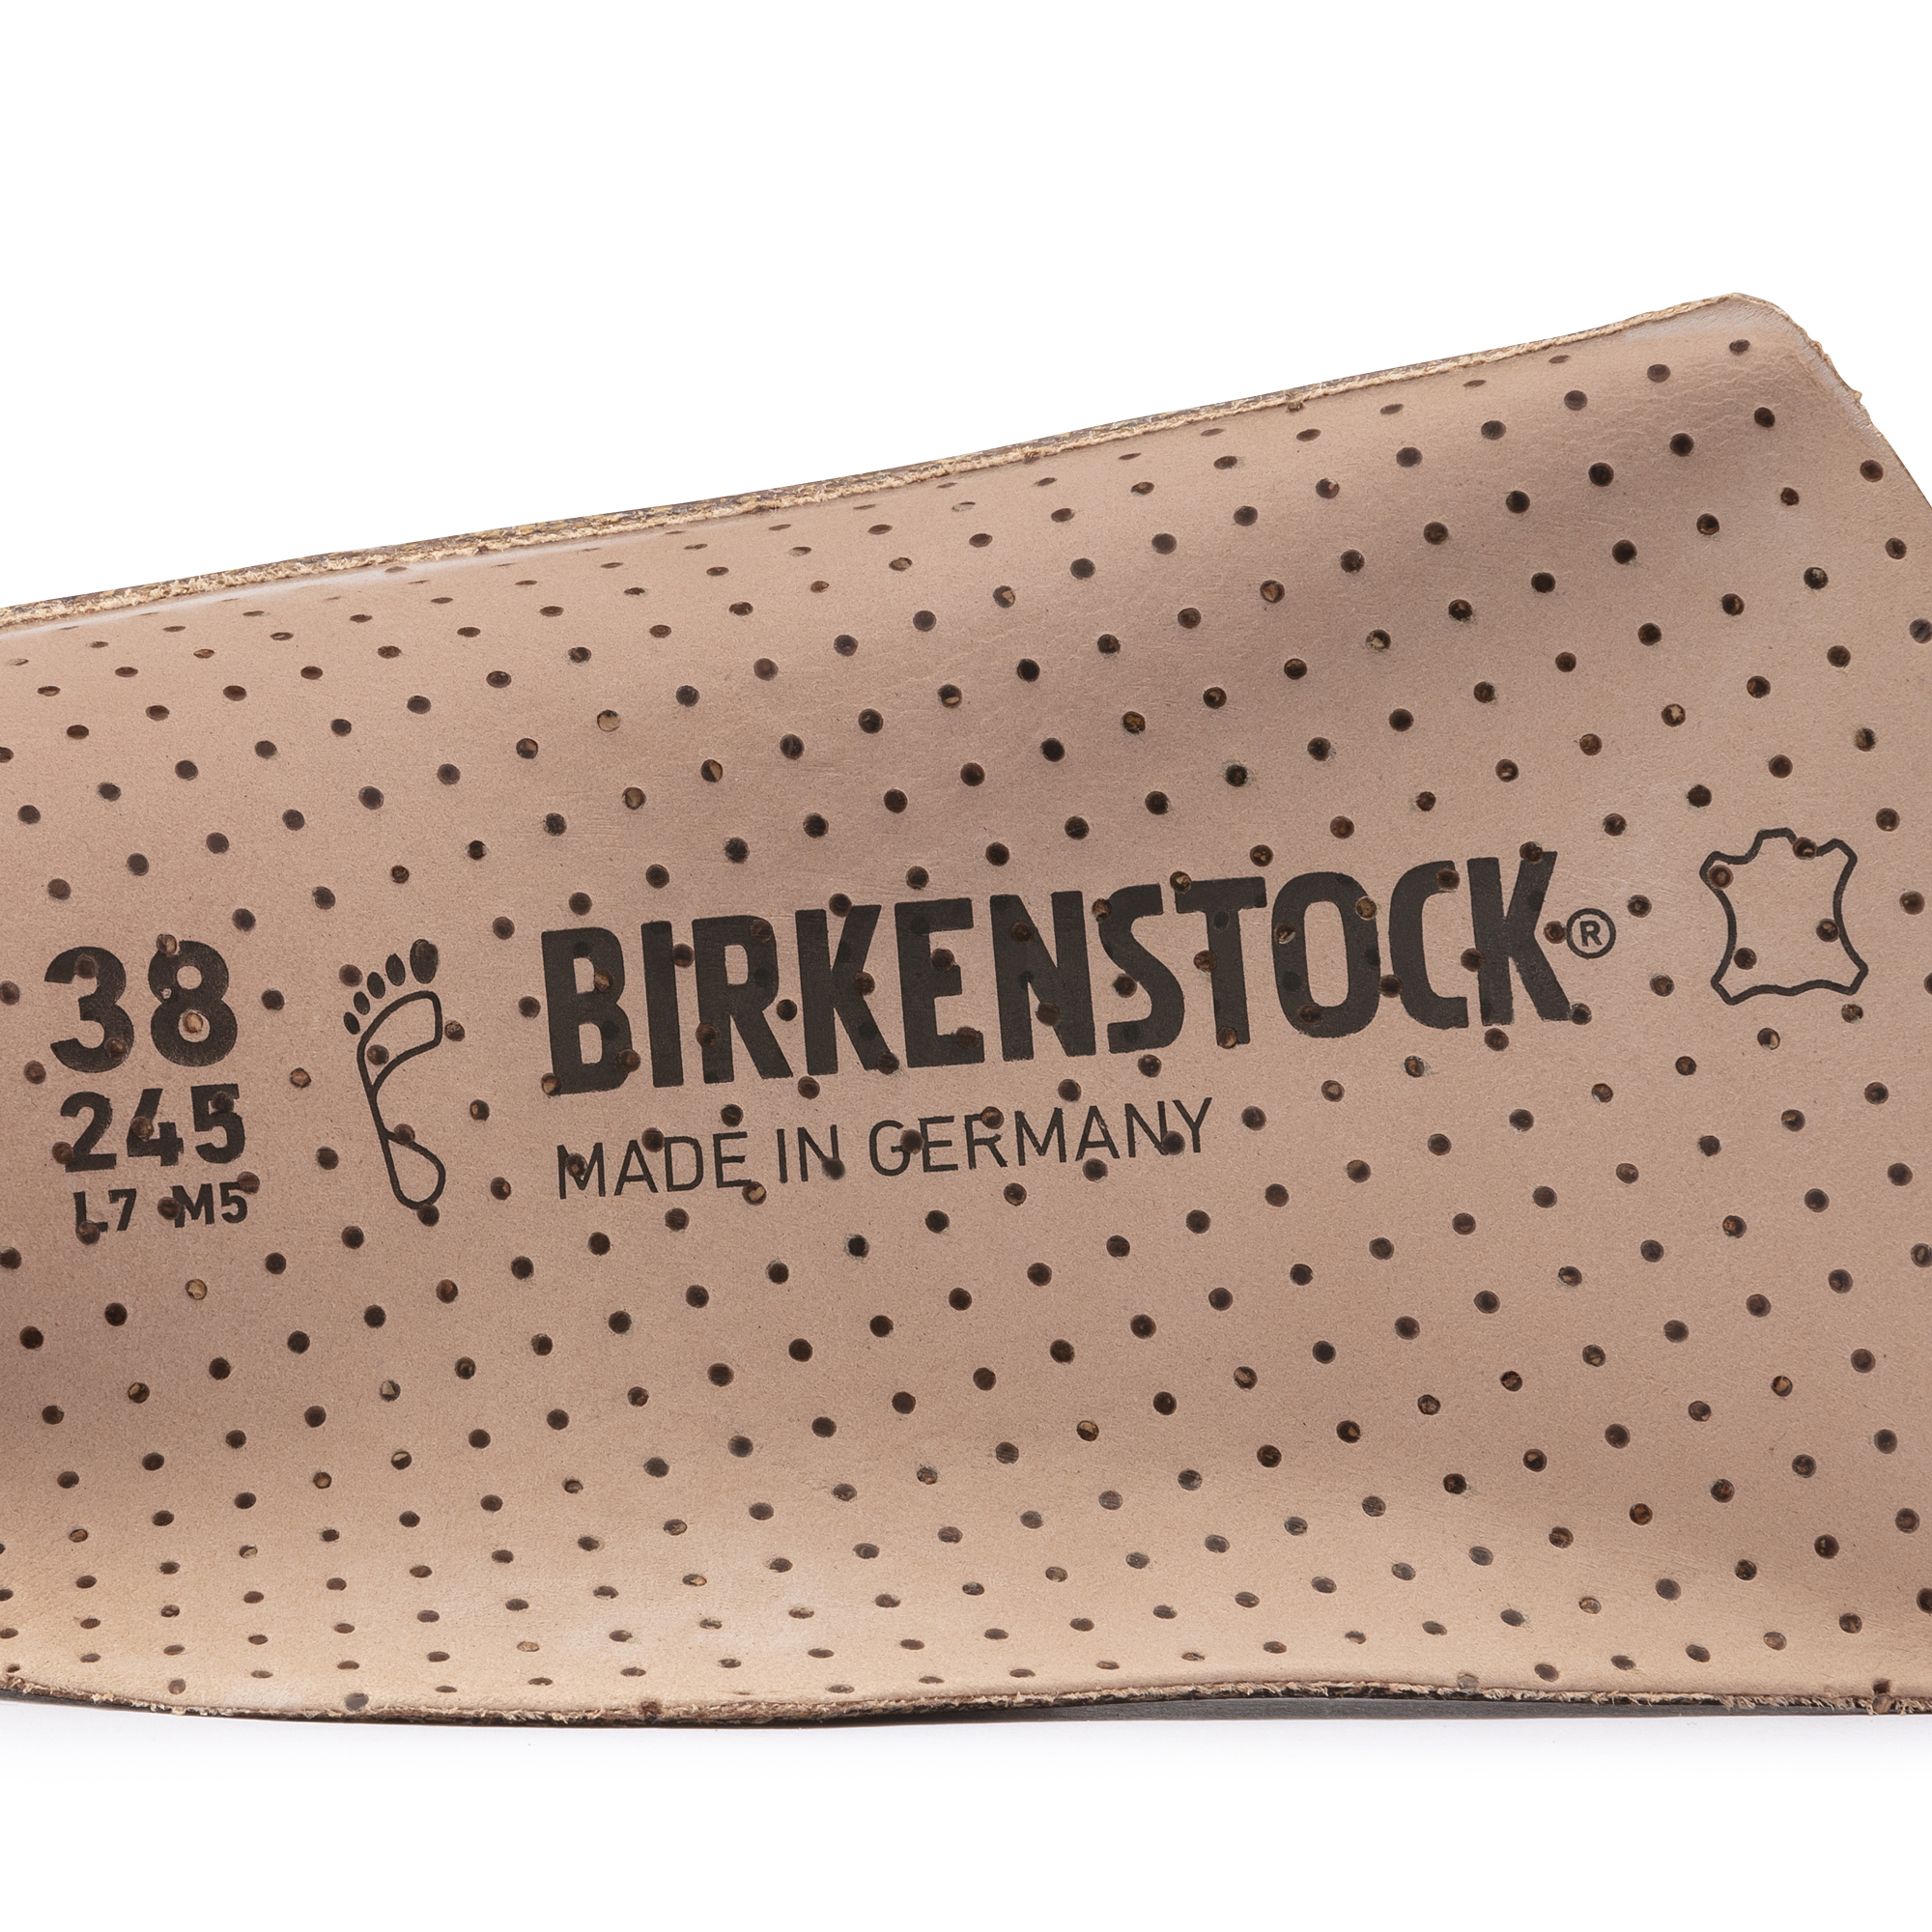 Birko Balance Insole Leather Brown | BIRKENSTOCK